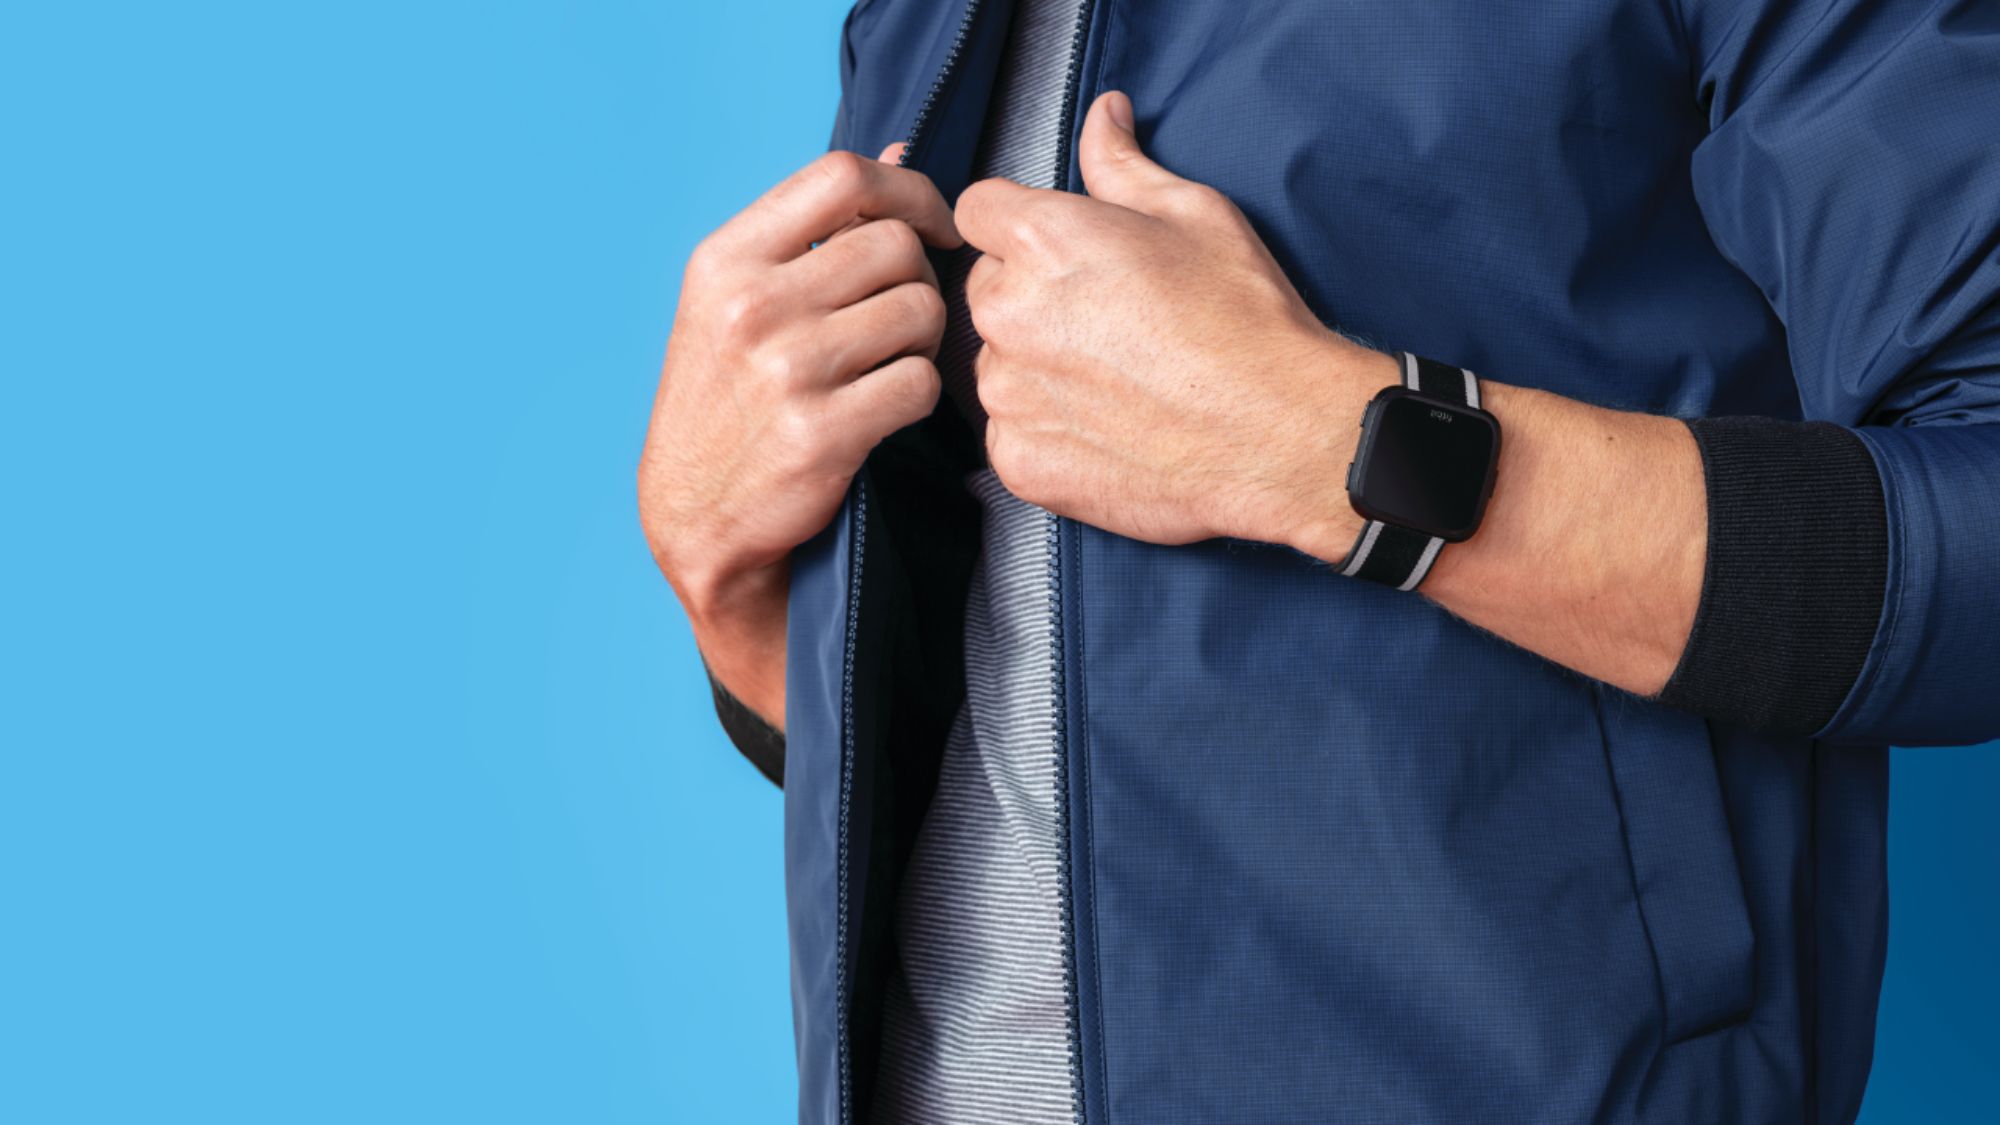 Best Buy: Woven Hybrid Watch Strap for Fitbit Versa Black/Gray FB166WBBKGYL